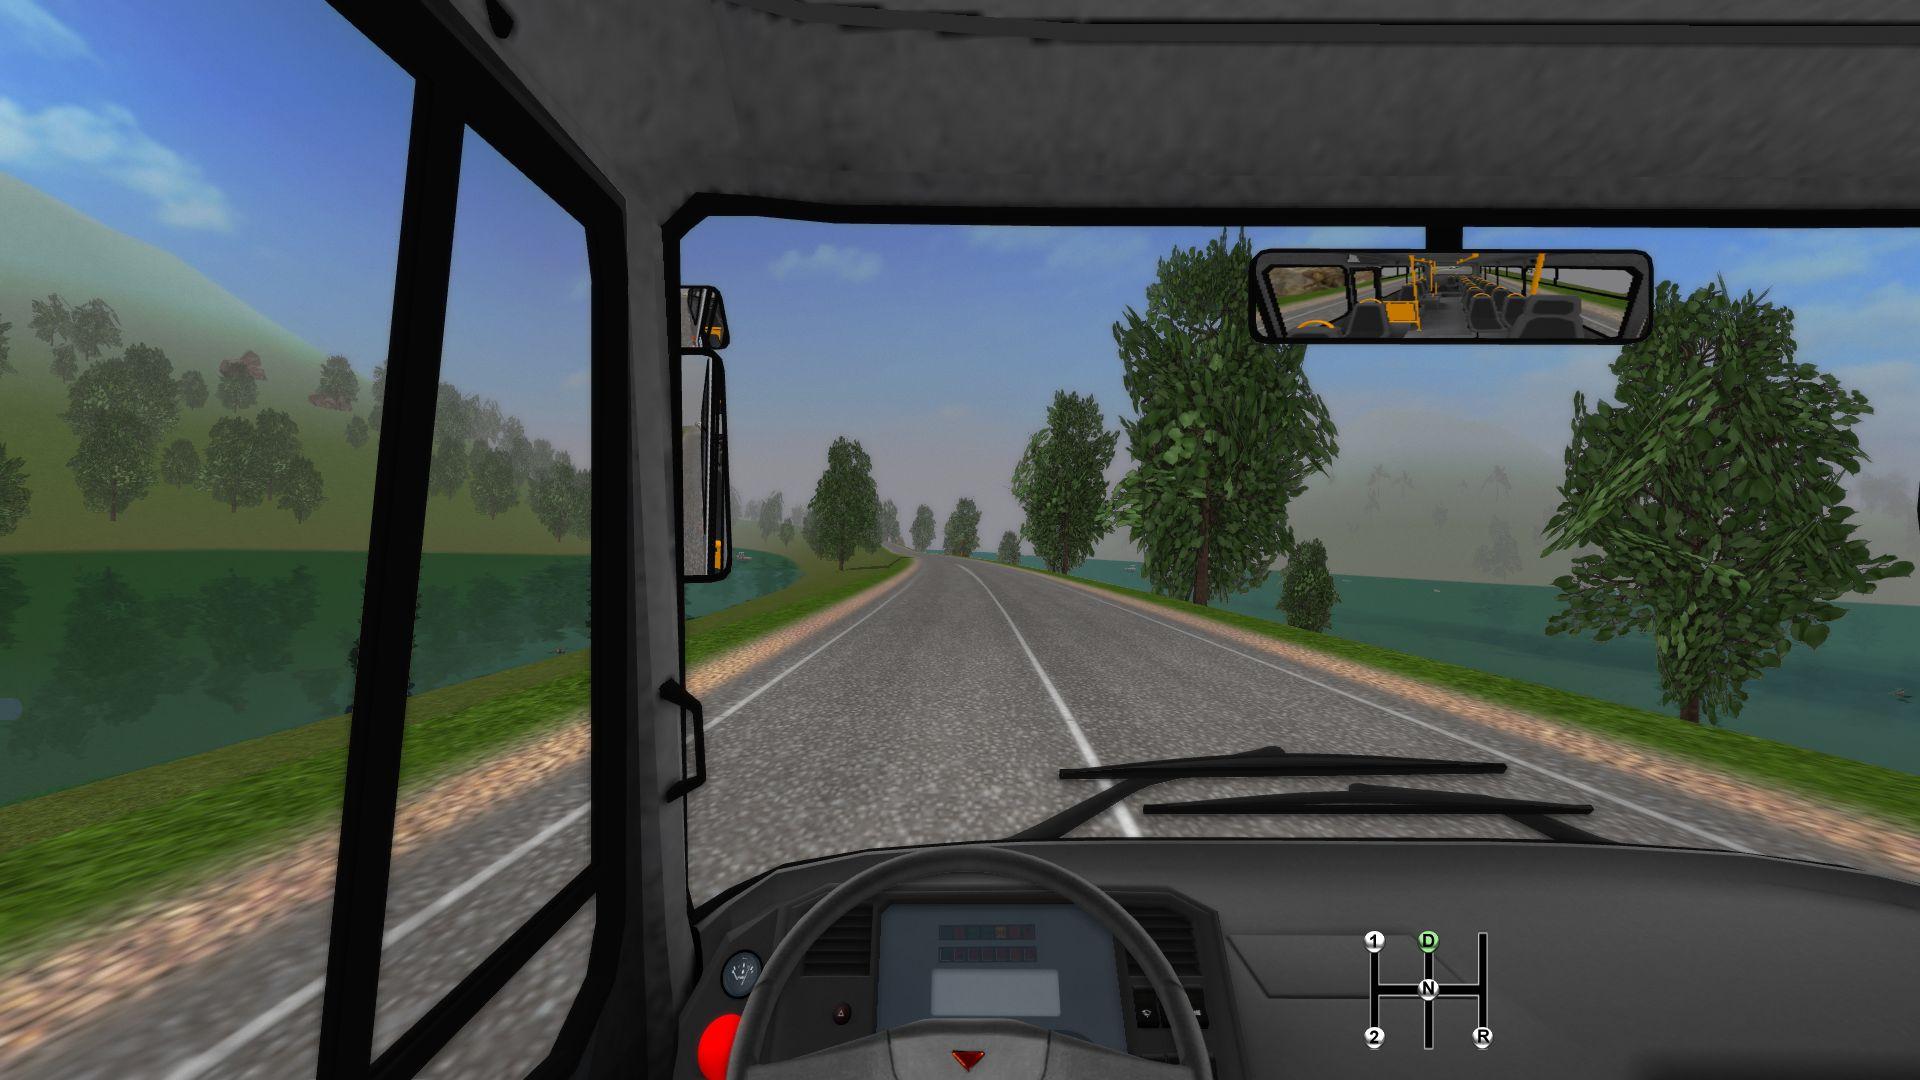 Screenshot №3 from game Drive Megapolis